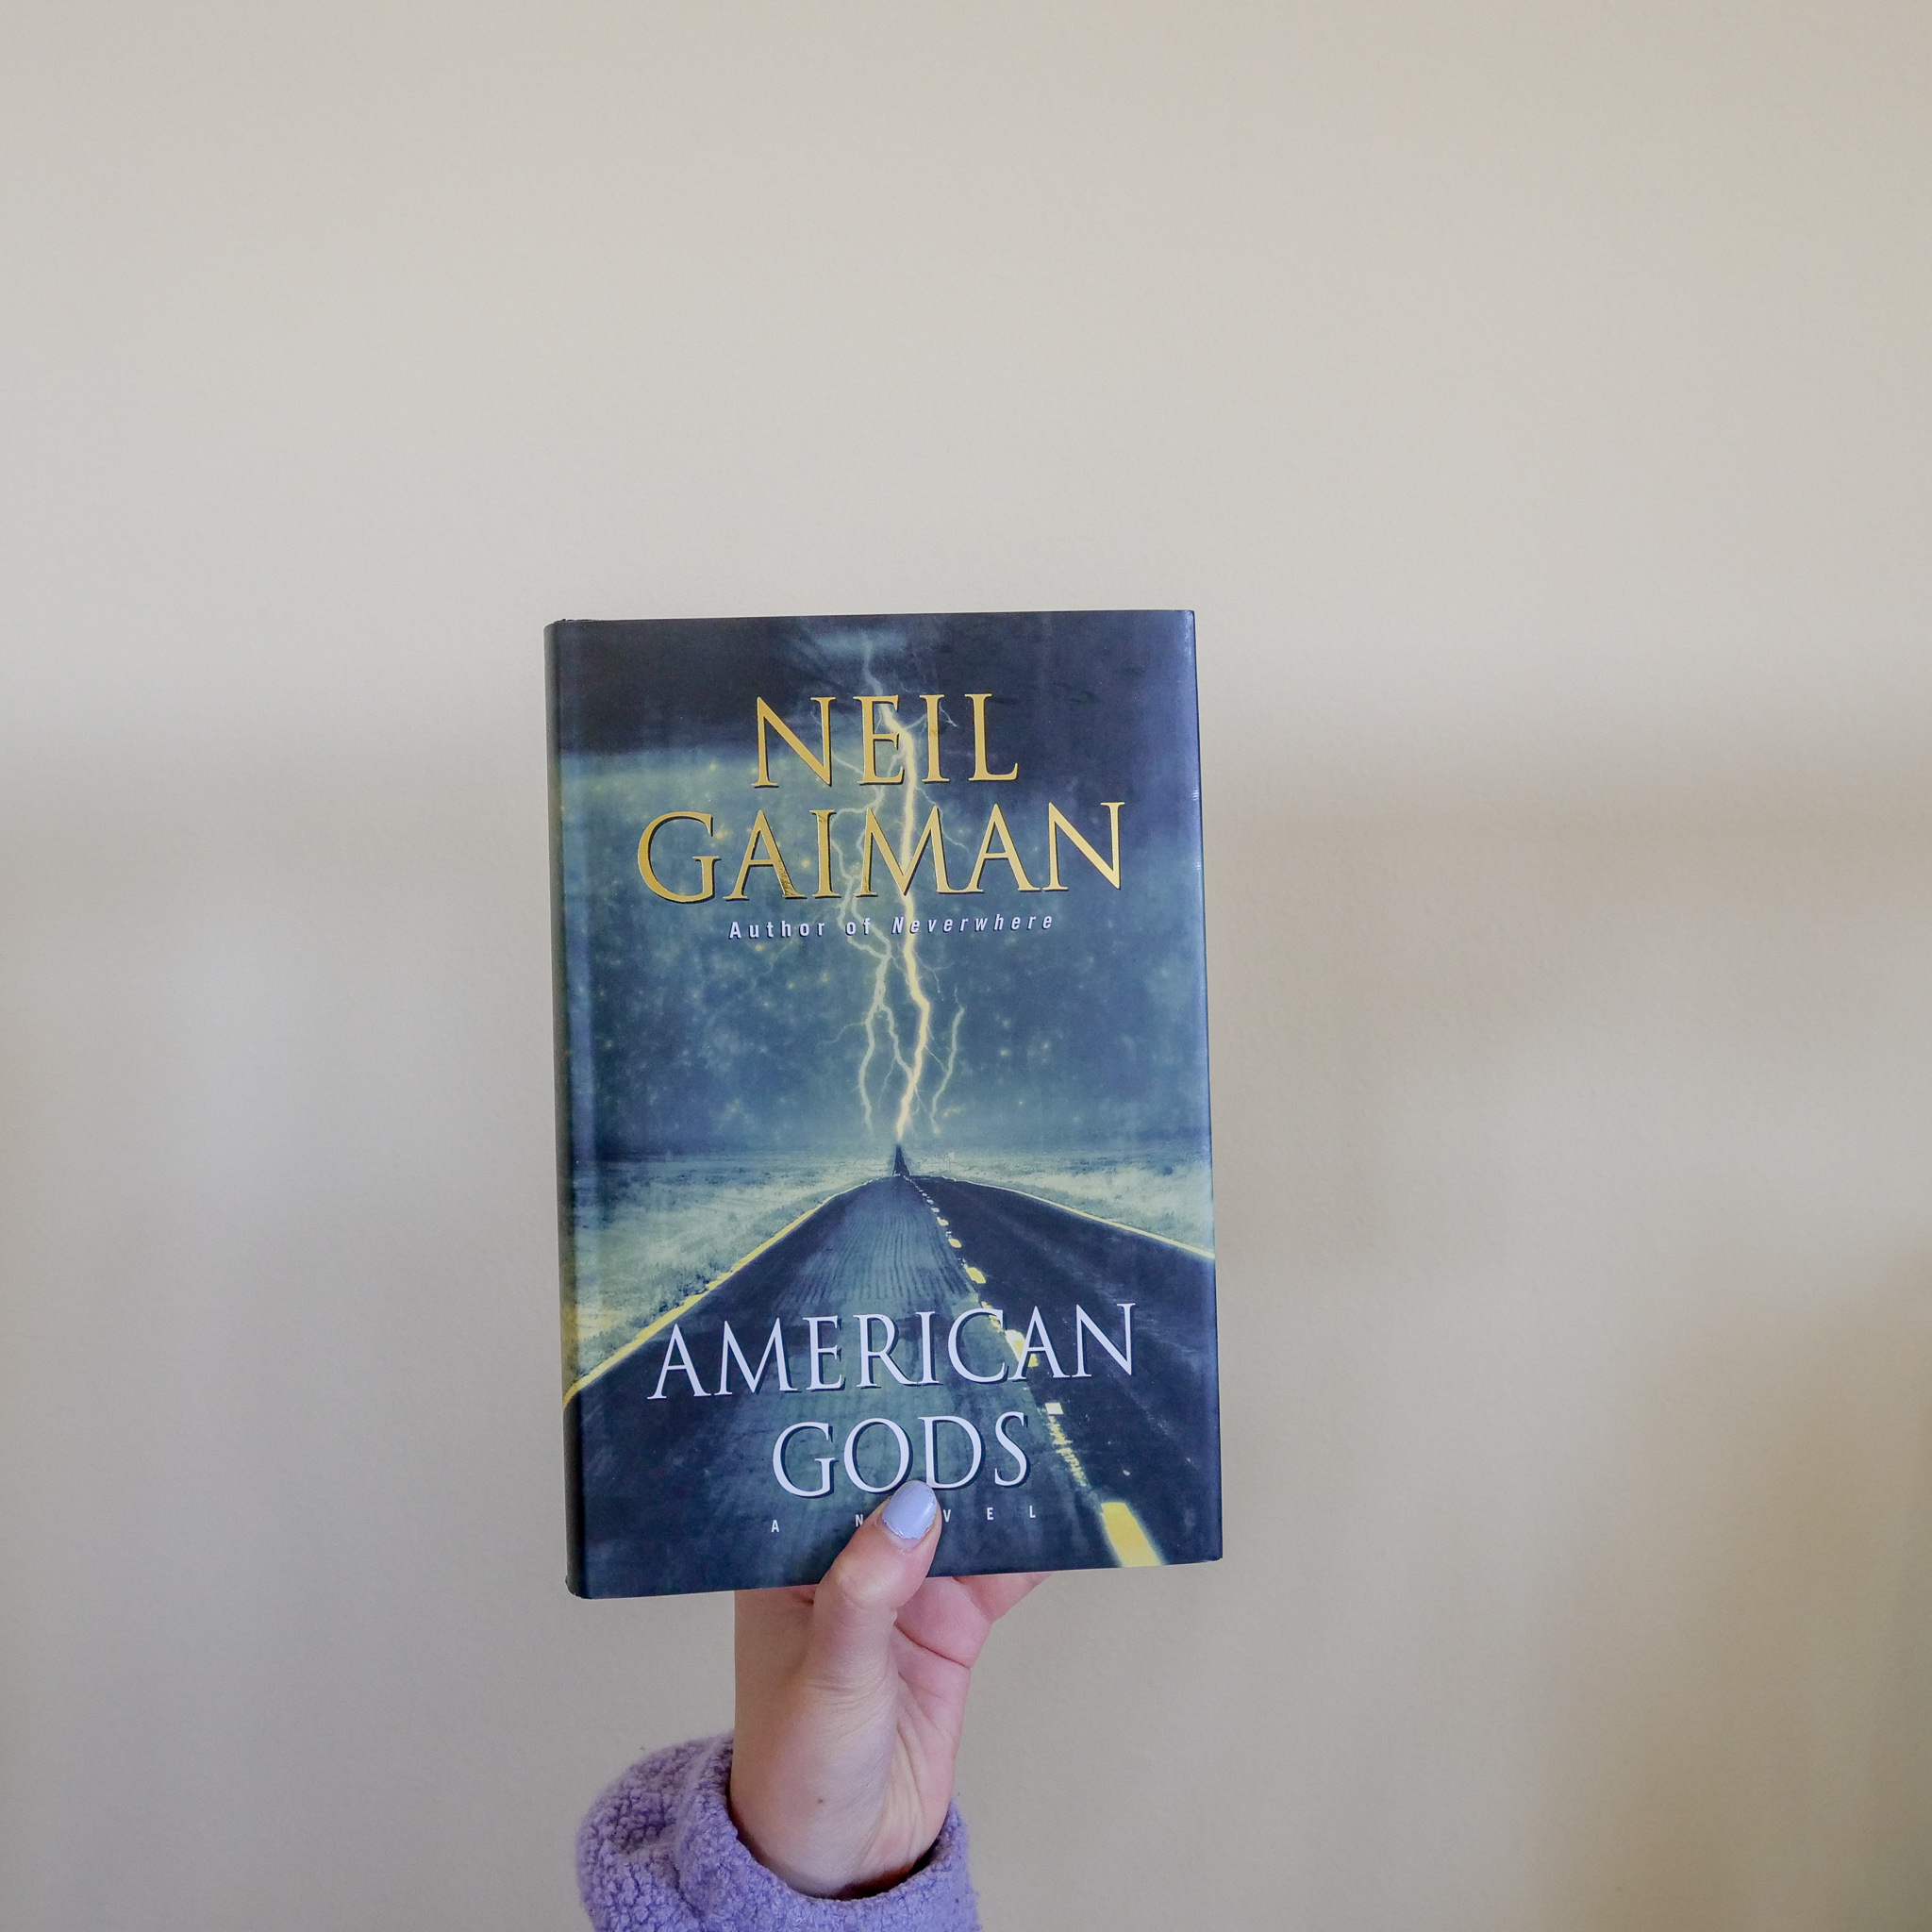 American Gods, Vol. 1 by Neil Gaiman